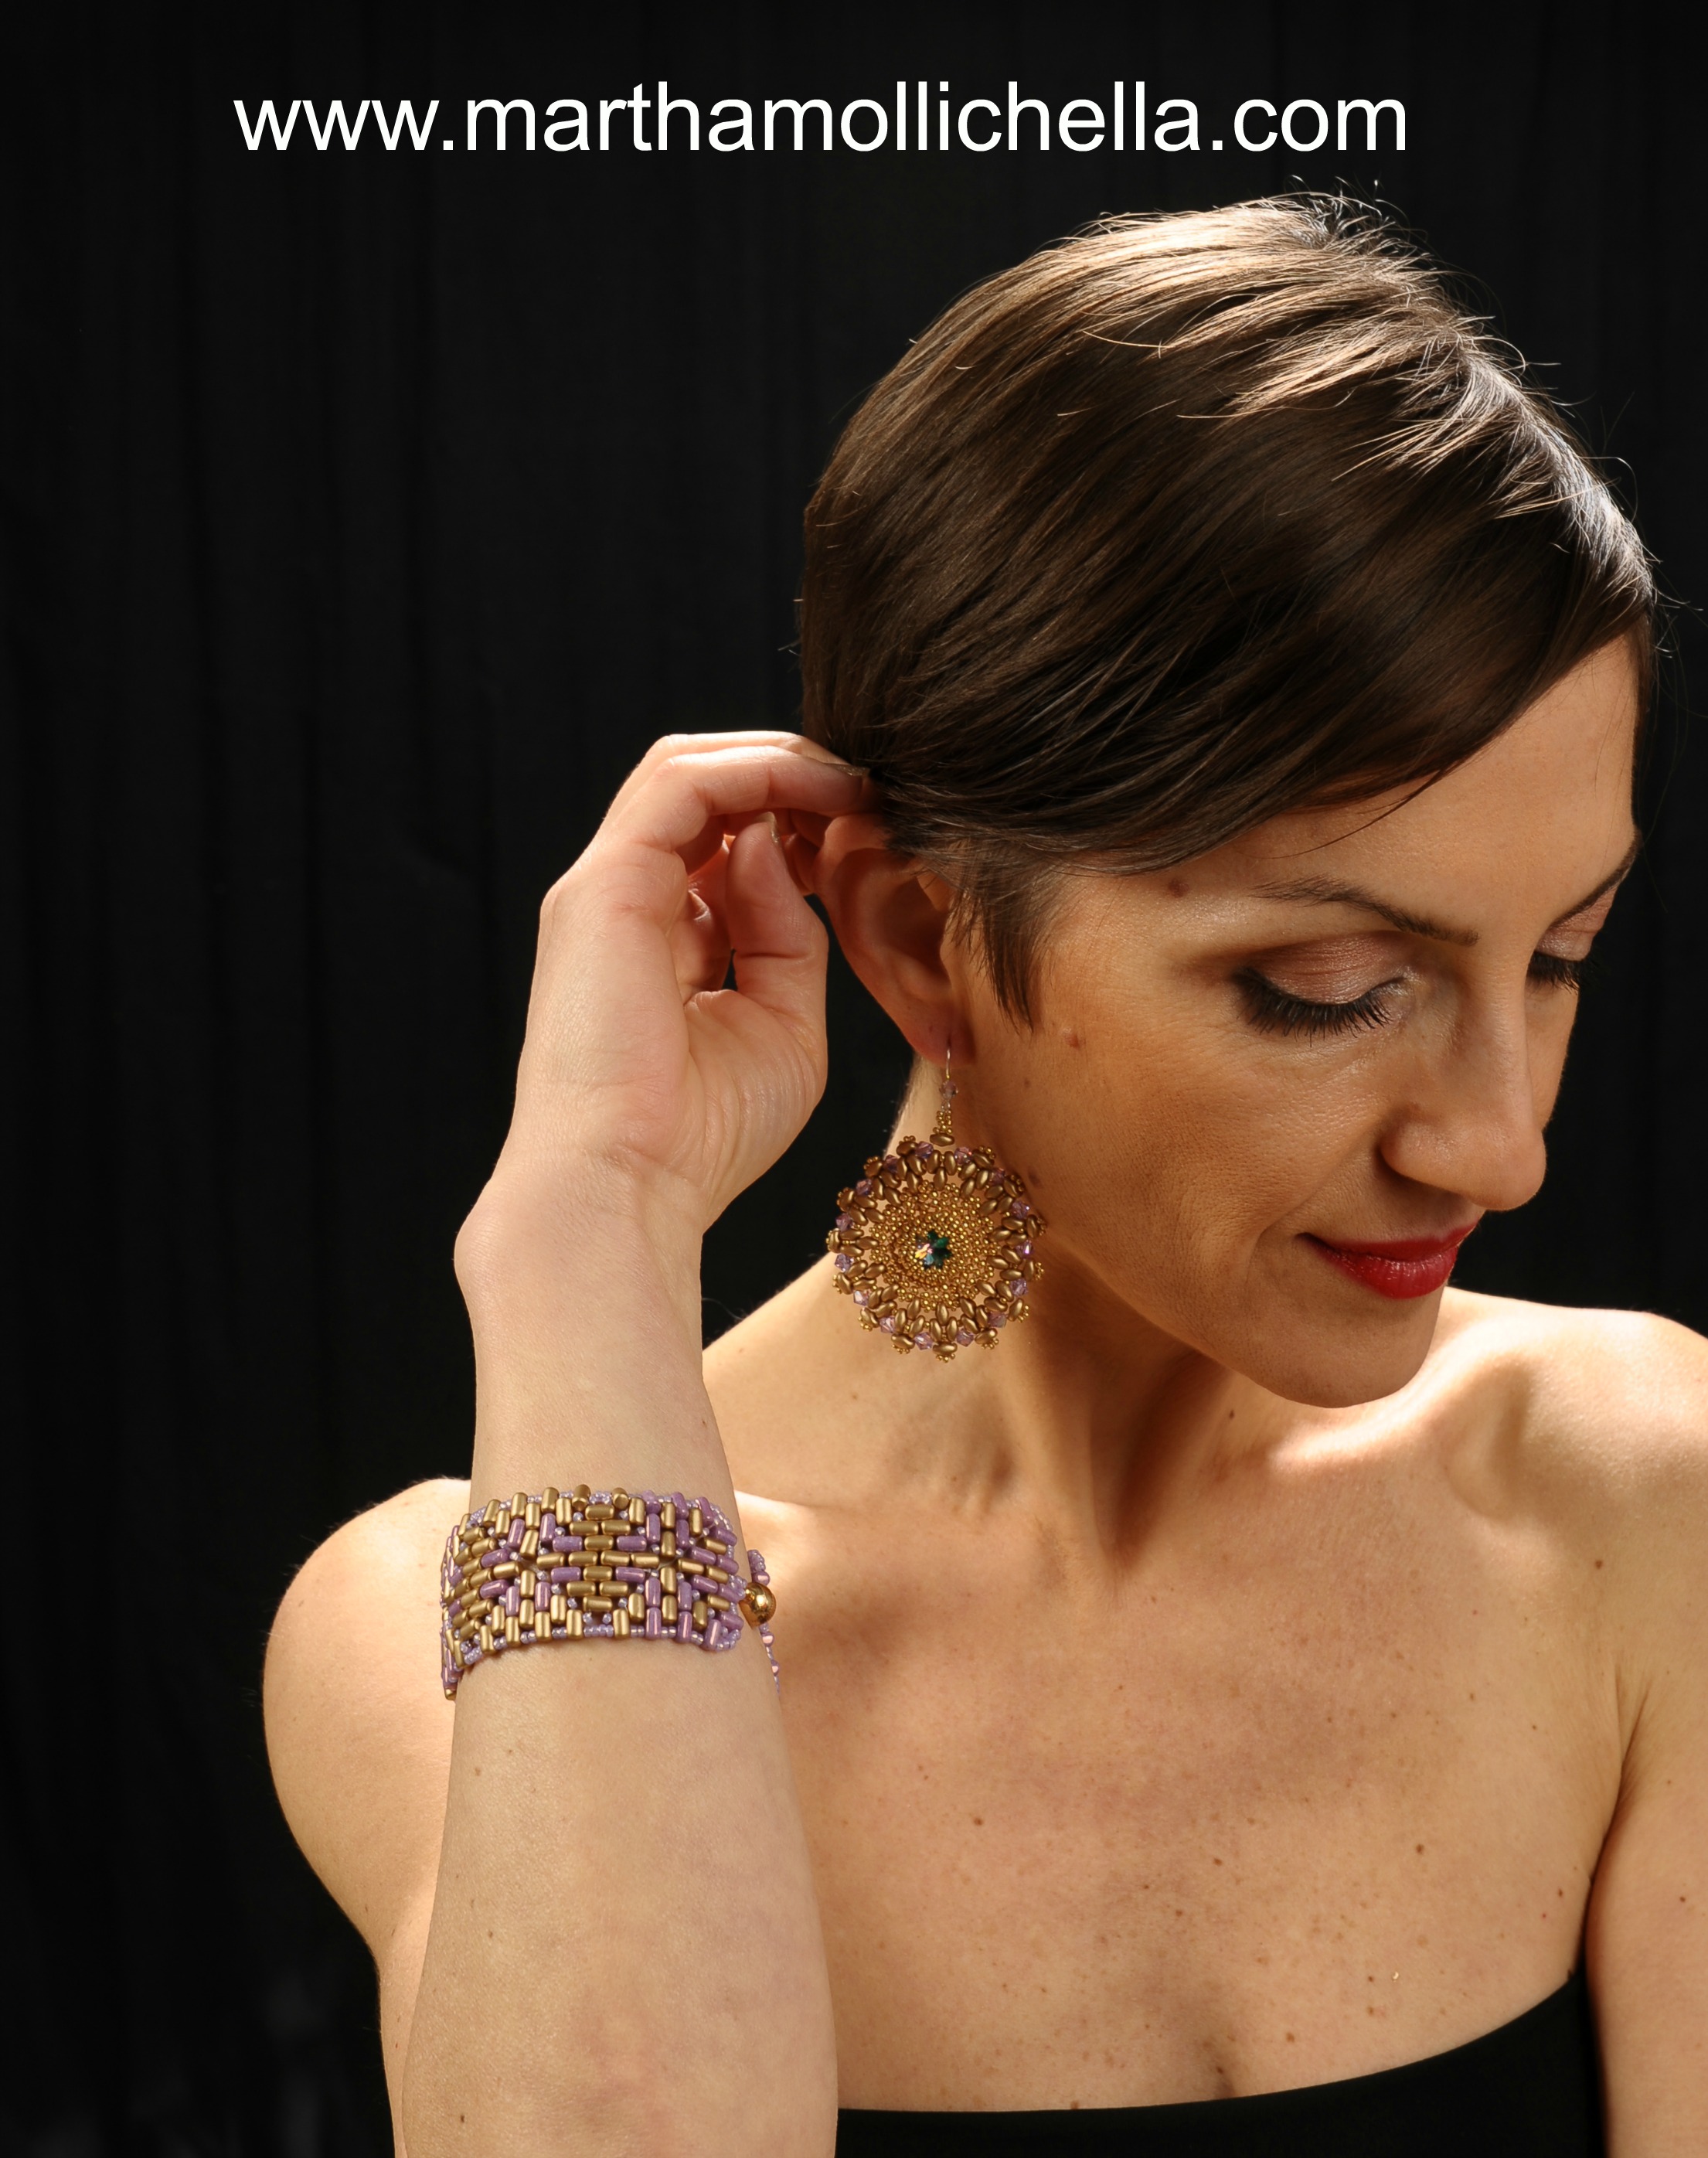 Martha Mollichella Handmade Jewelry Jewellery made in Italy with love